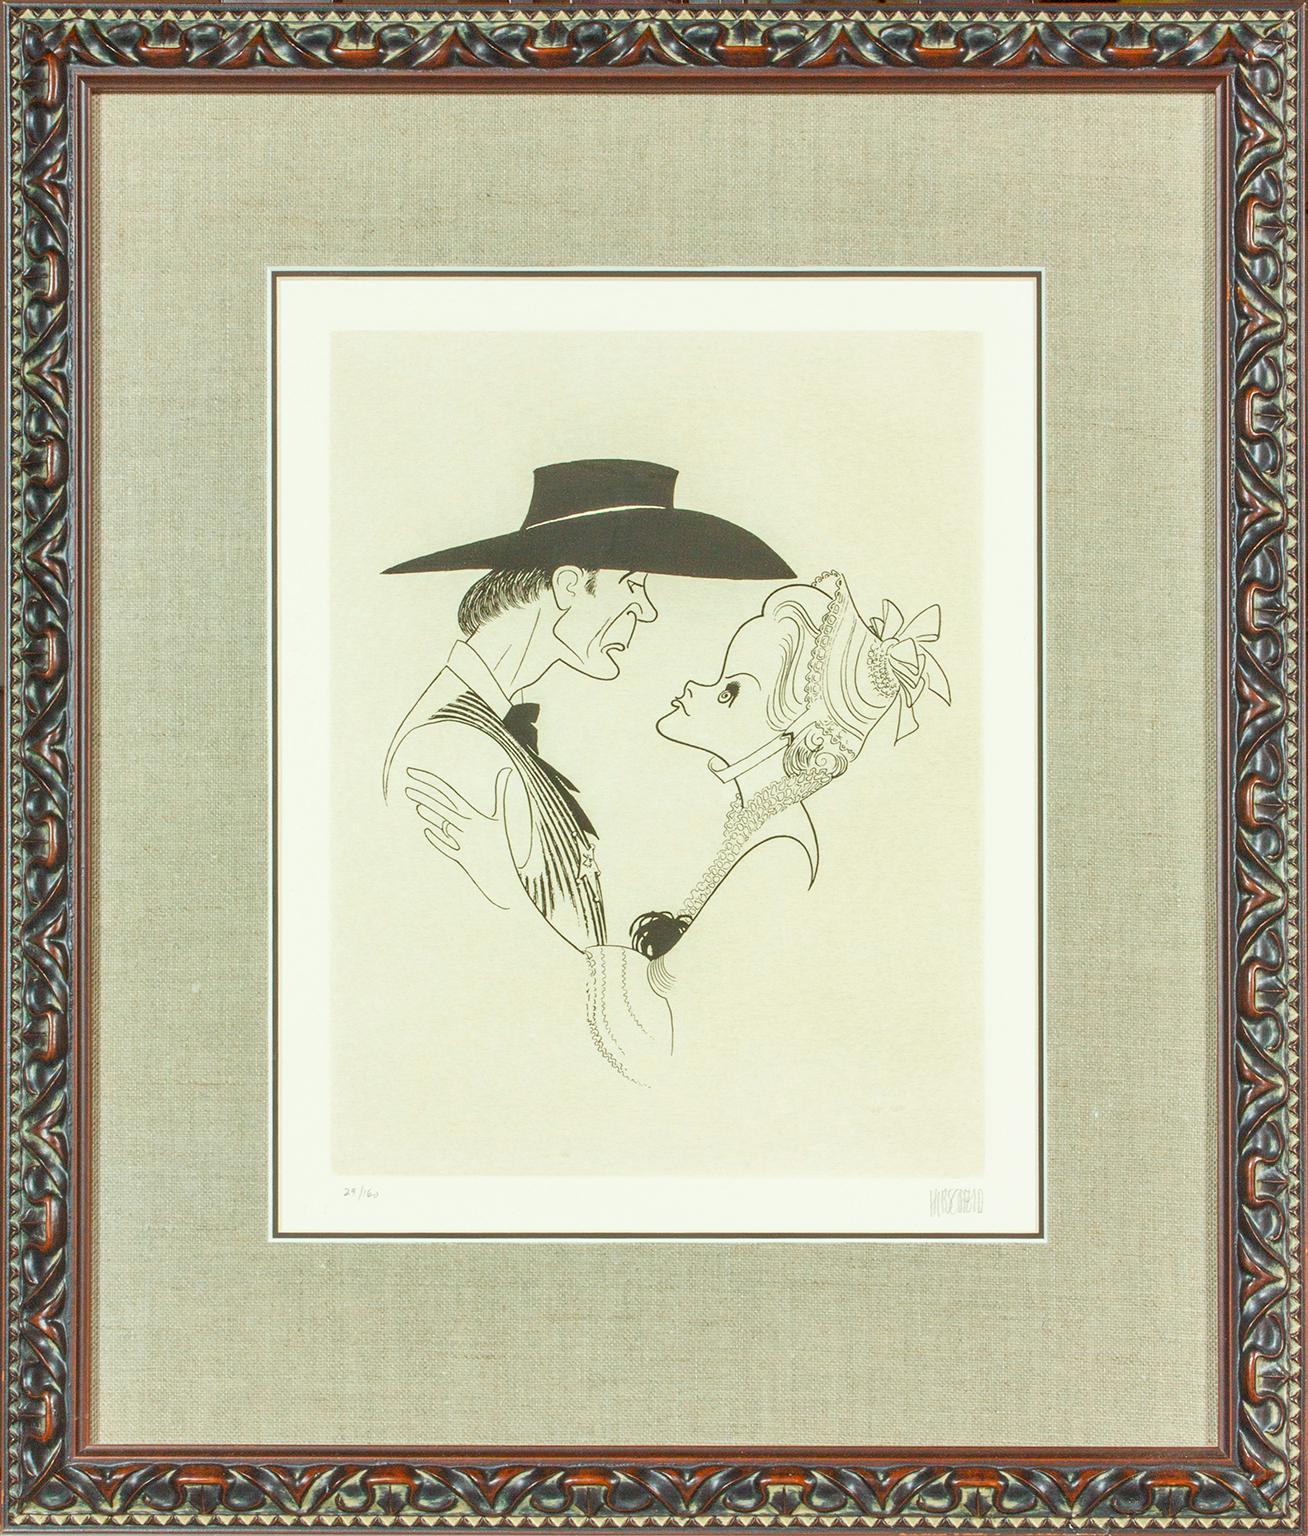 Albert Al Hirschfeld Figurative Print - Gary Cooper and Grace Kelly in "High Noon" original etching by Al Hirschfeld.